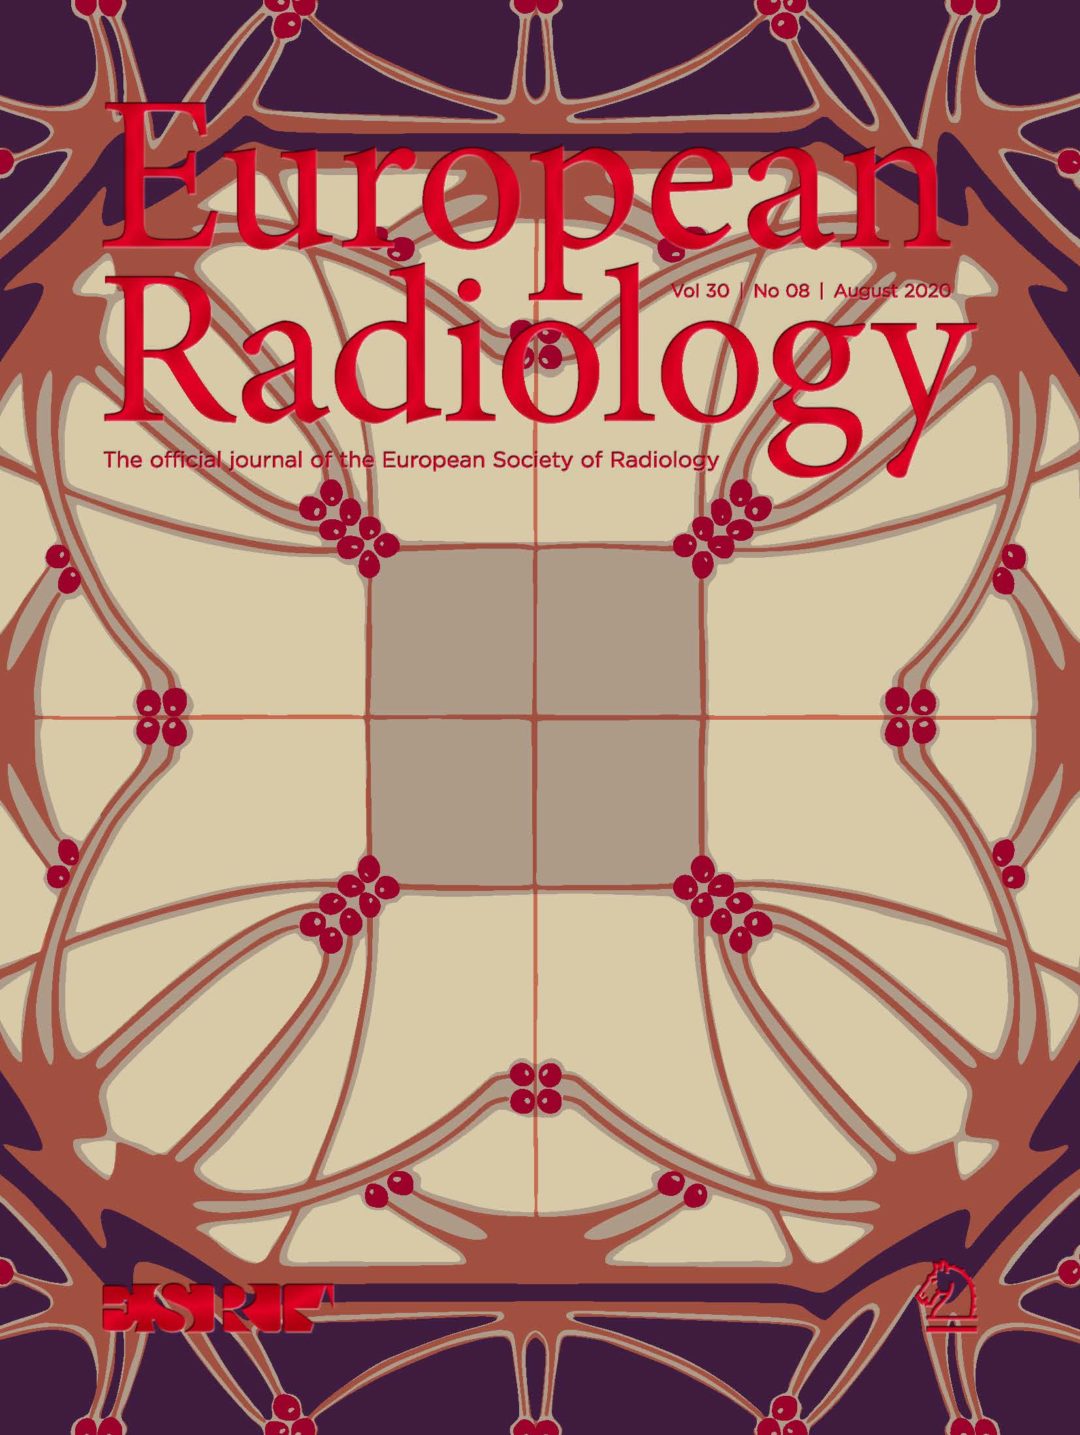 For Readers European Radiology